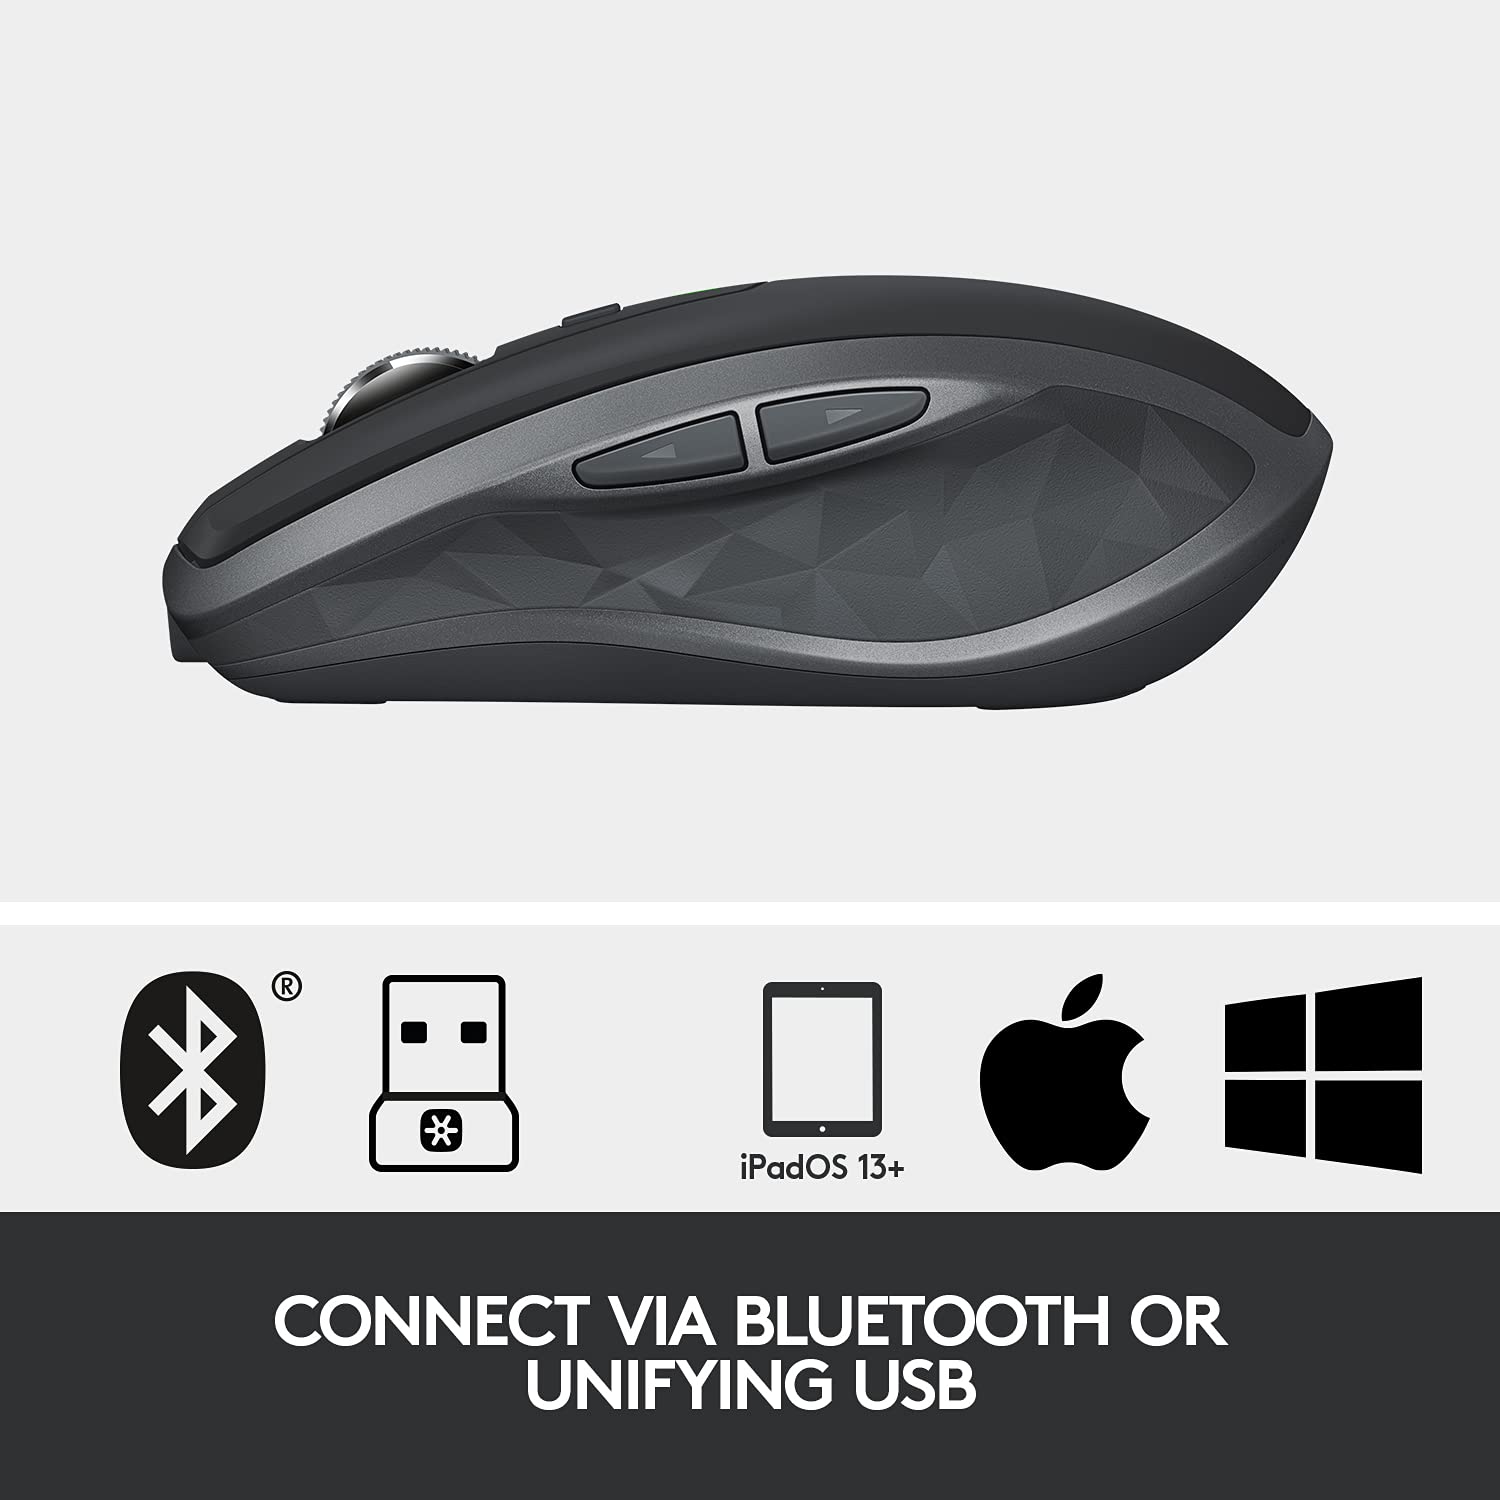 Logitech MX Anywhere 2S Wireless Mouse  - Like New